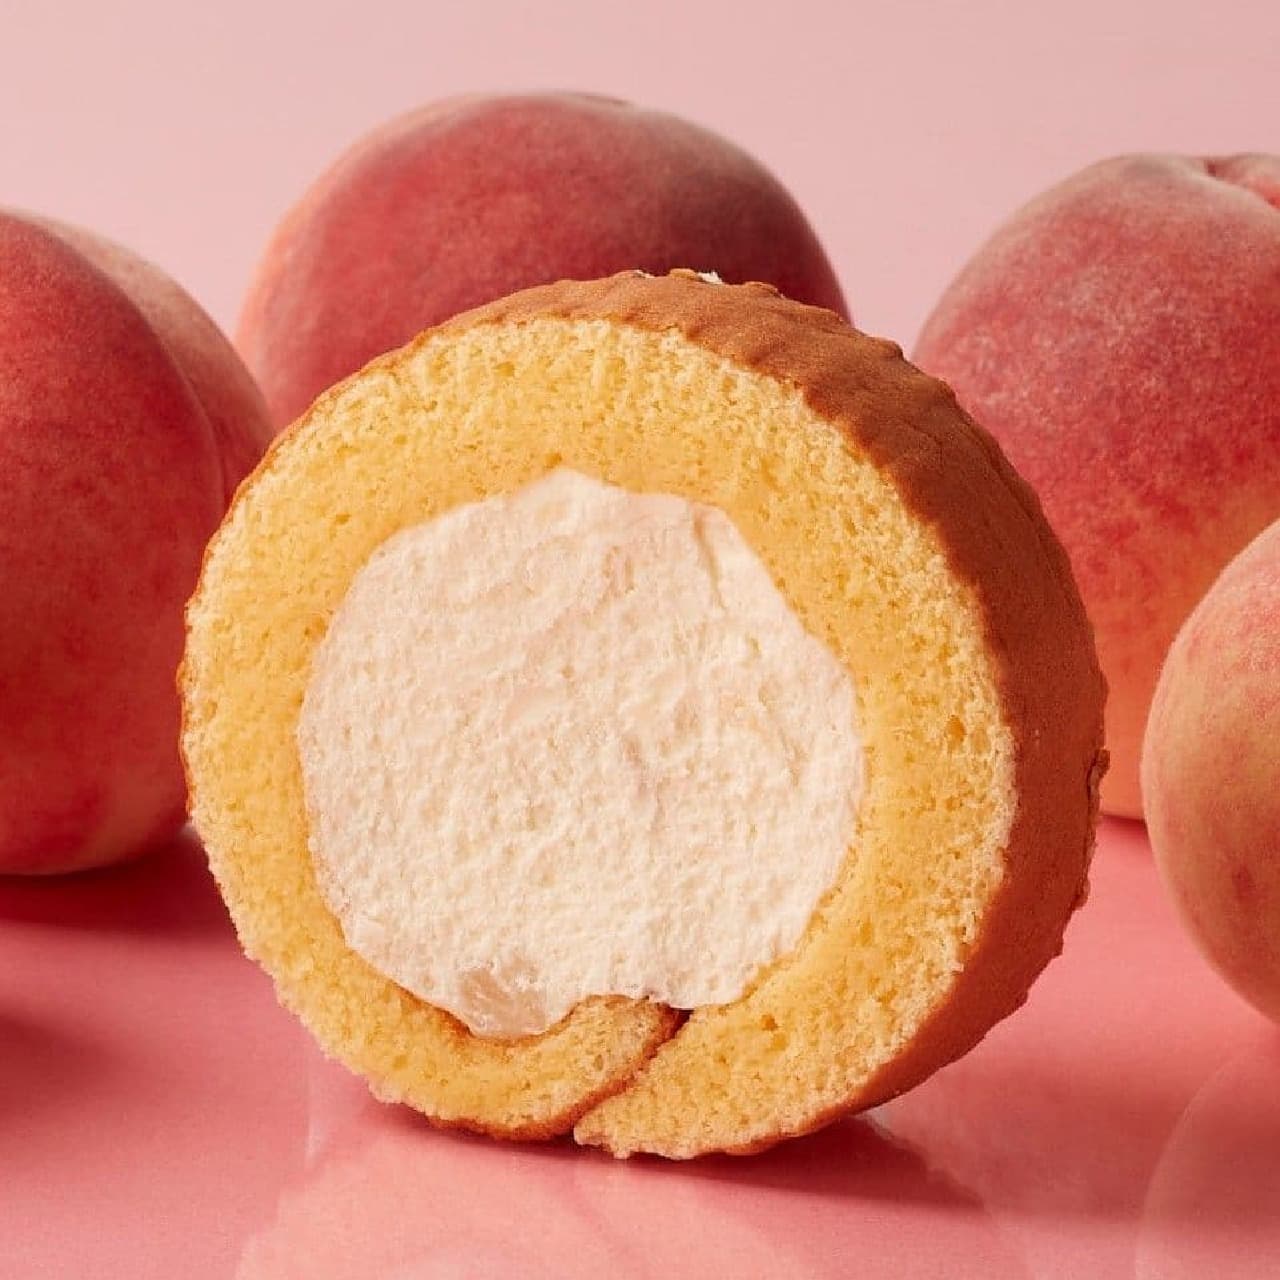 SHATERAISE "Soft Rolls with Yamanashi White Peaches